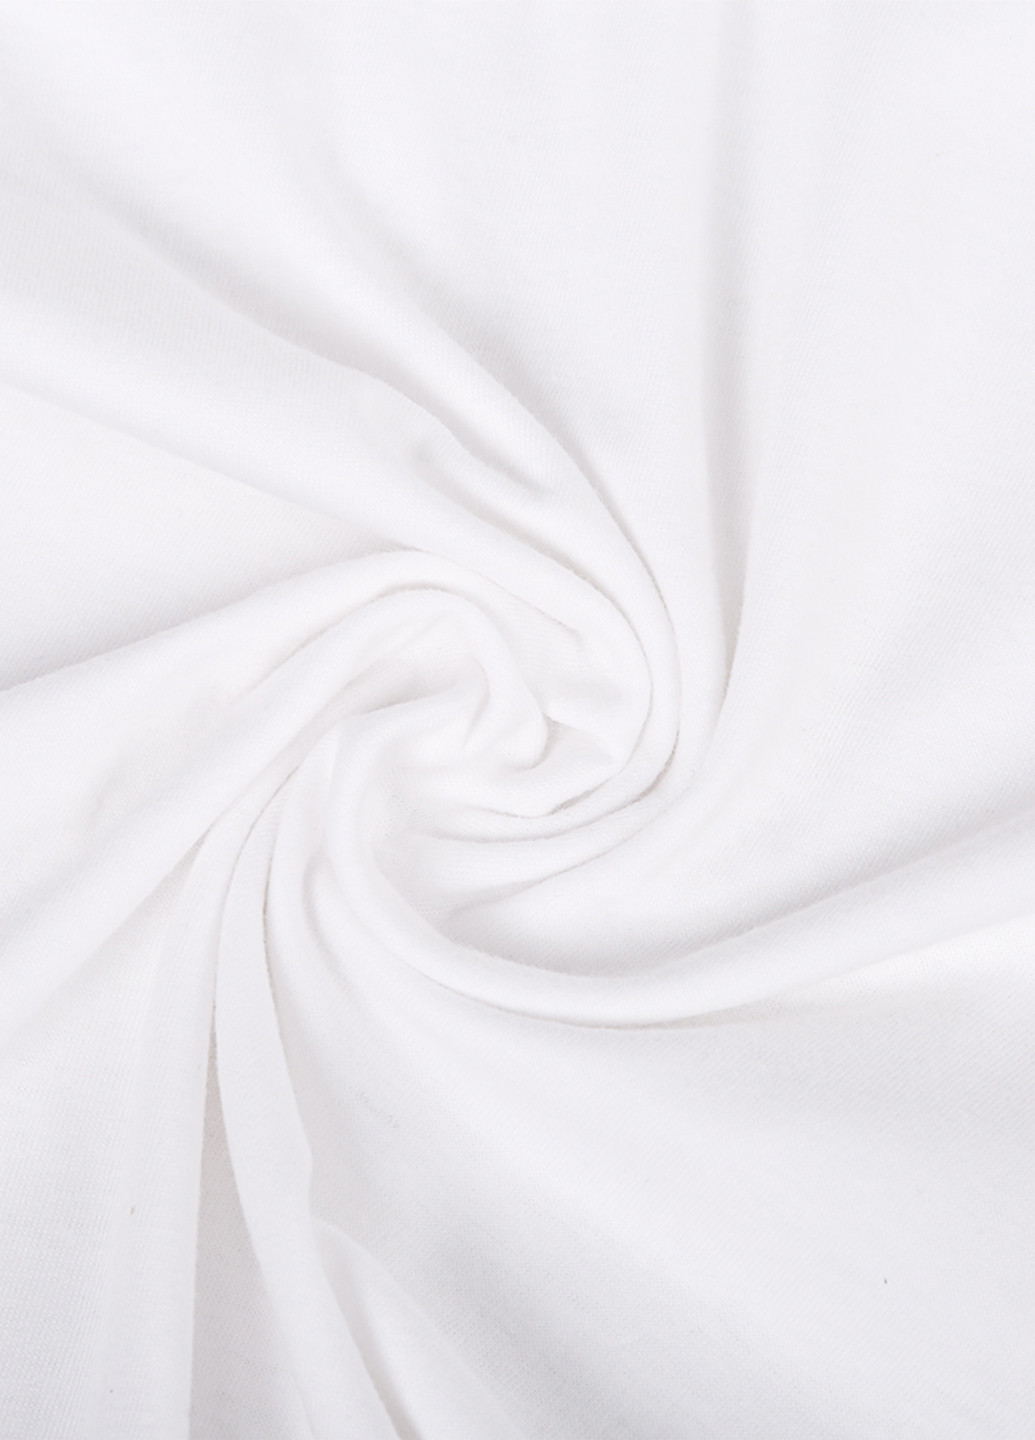 Белая демисезонная футболка детская билл шифр гравити фолз (bill cipher gravity falls) белый (9224-2627) 110 см MobiPrint